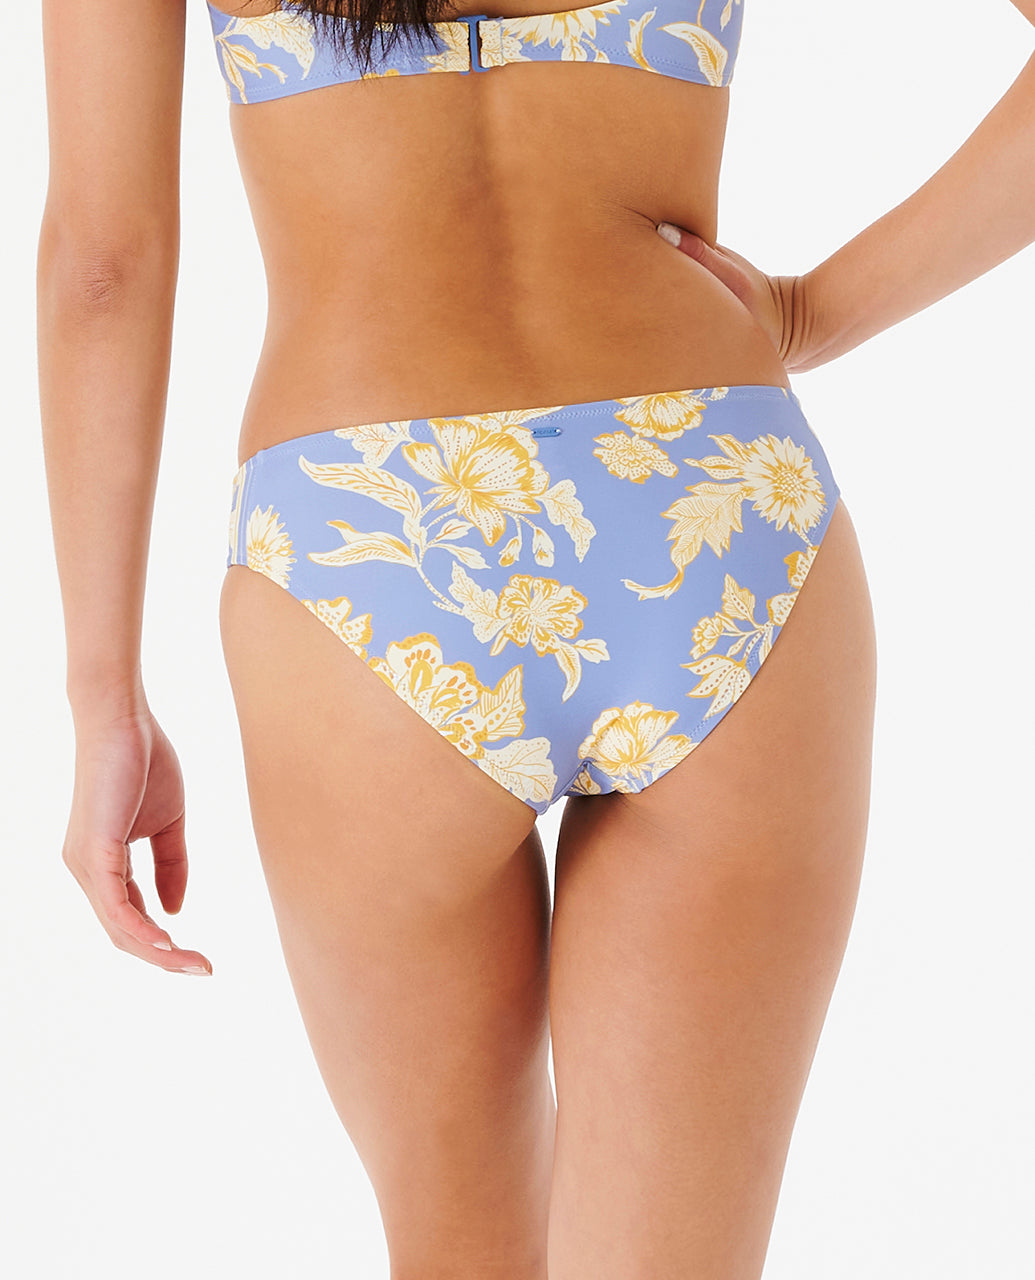 [SALE] Women's OCEANS TOGETHER FULL PANT Bikini Set Bottoms